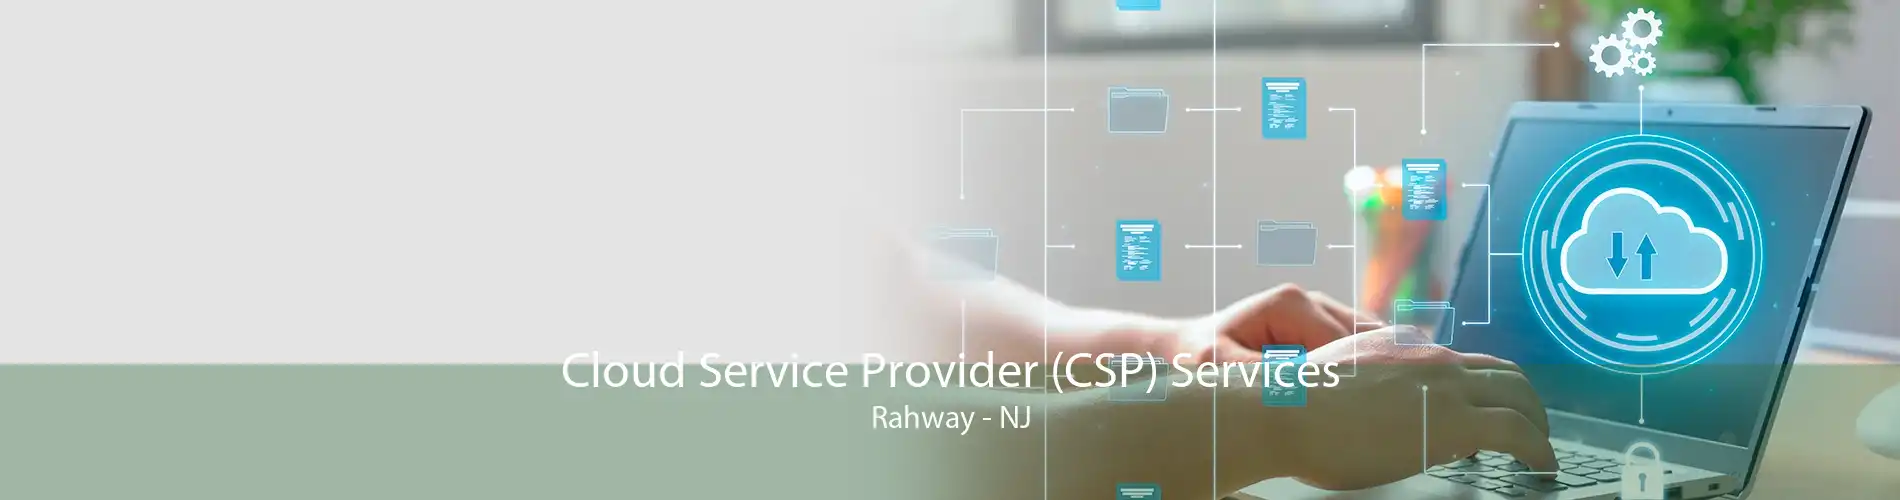 Cloud Service Provider (CSP) Services Rahway - NJ